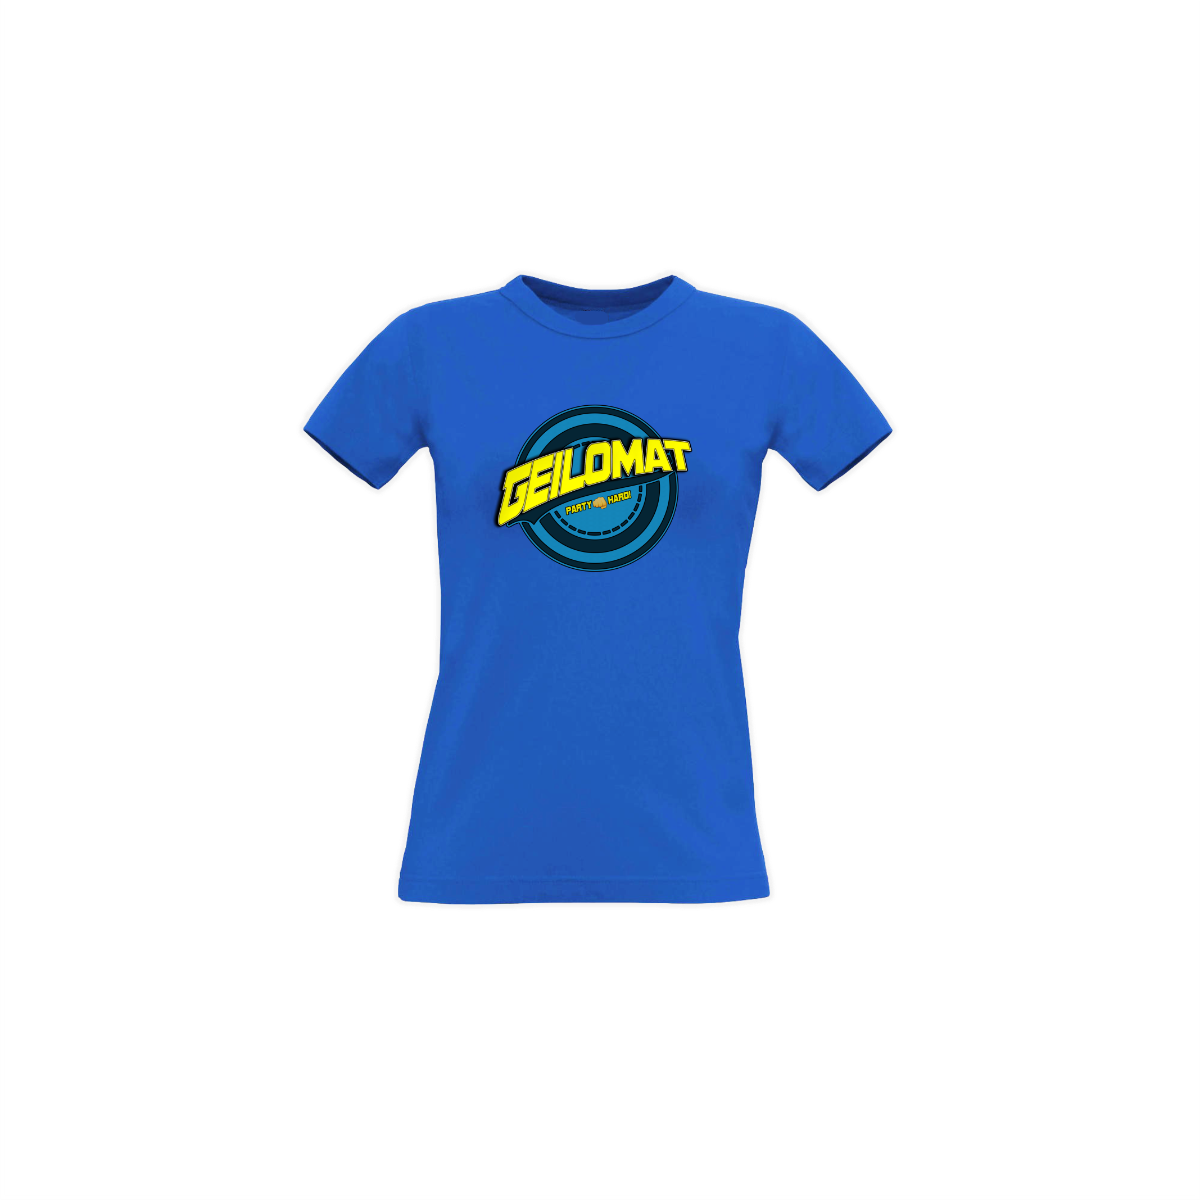 Girly-Shirt "GEILOMAT Logo" (bunt) blau